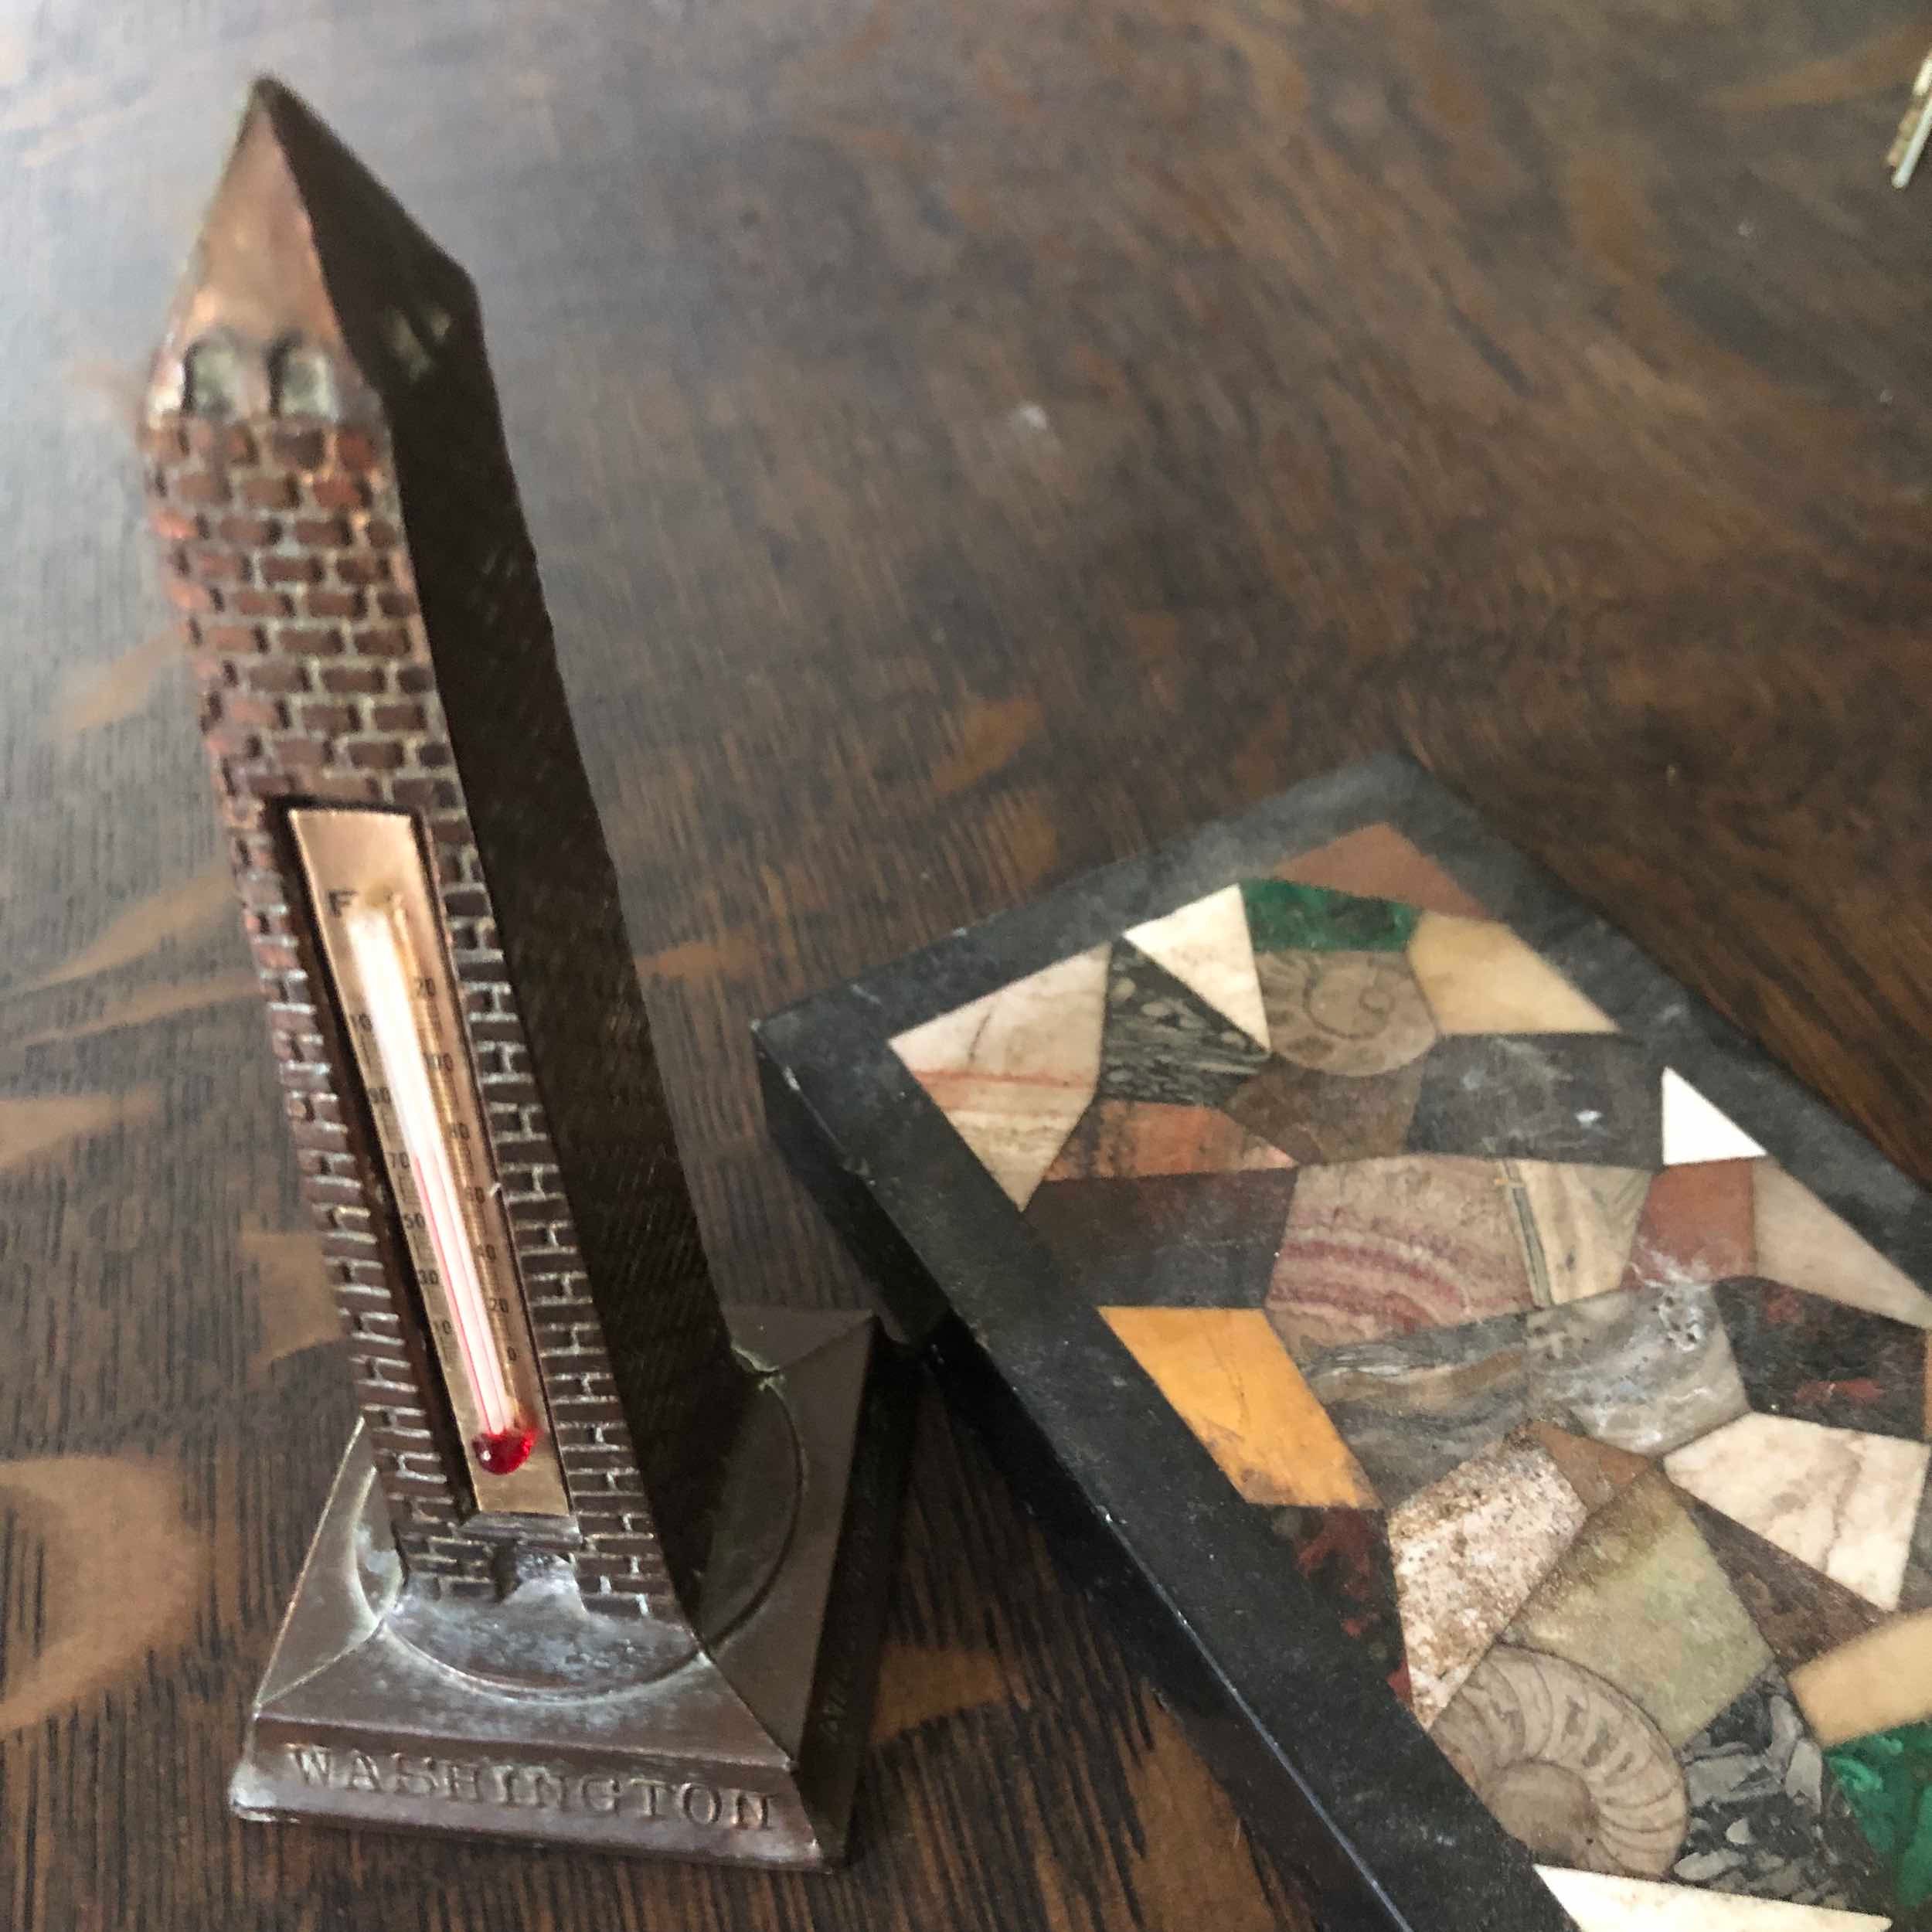 Glass Obelisk Desk Thermometer